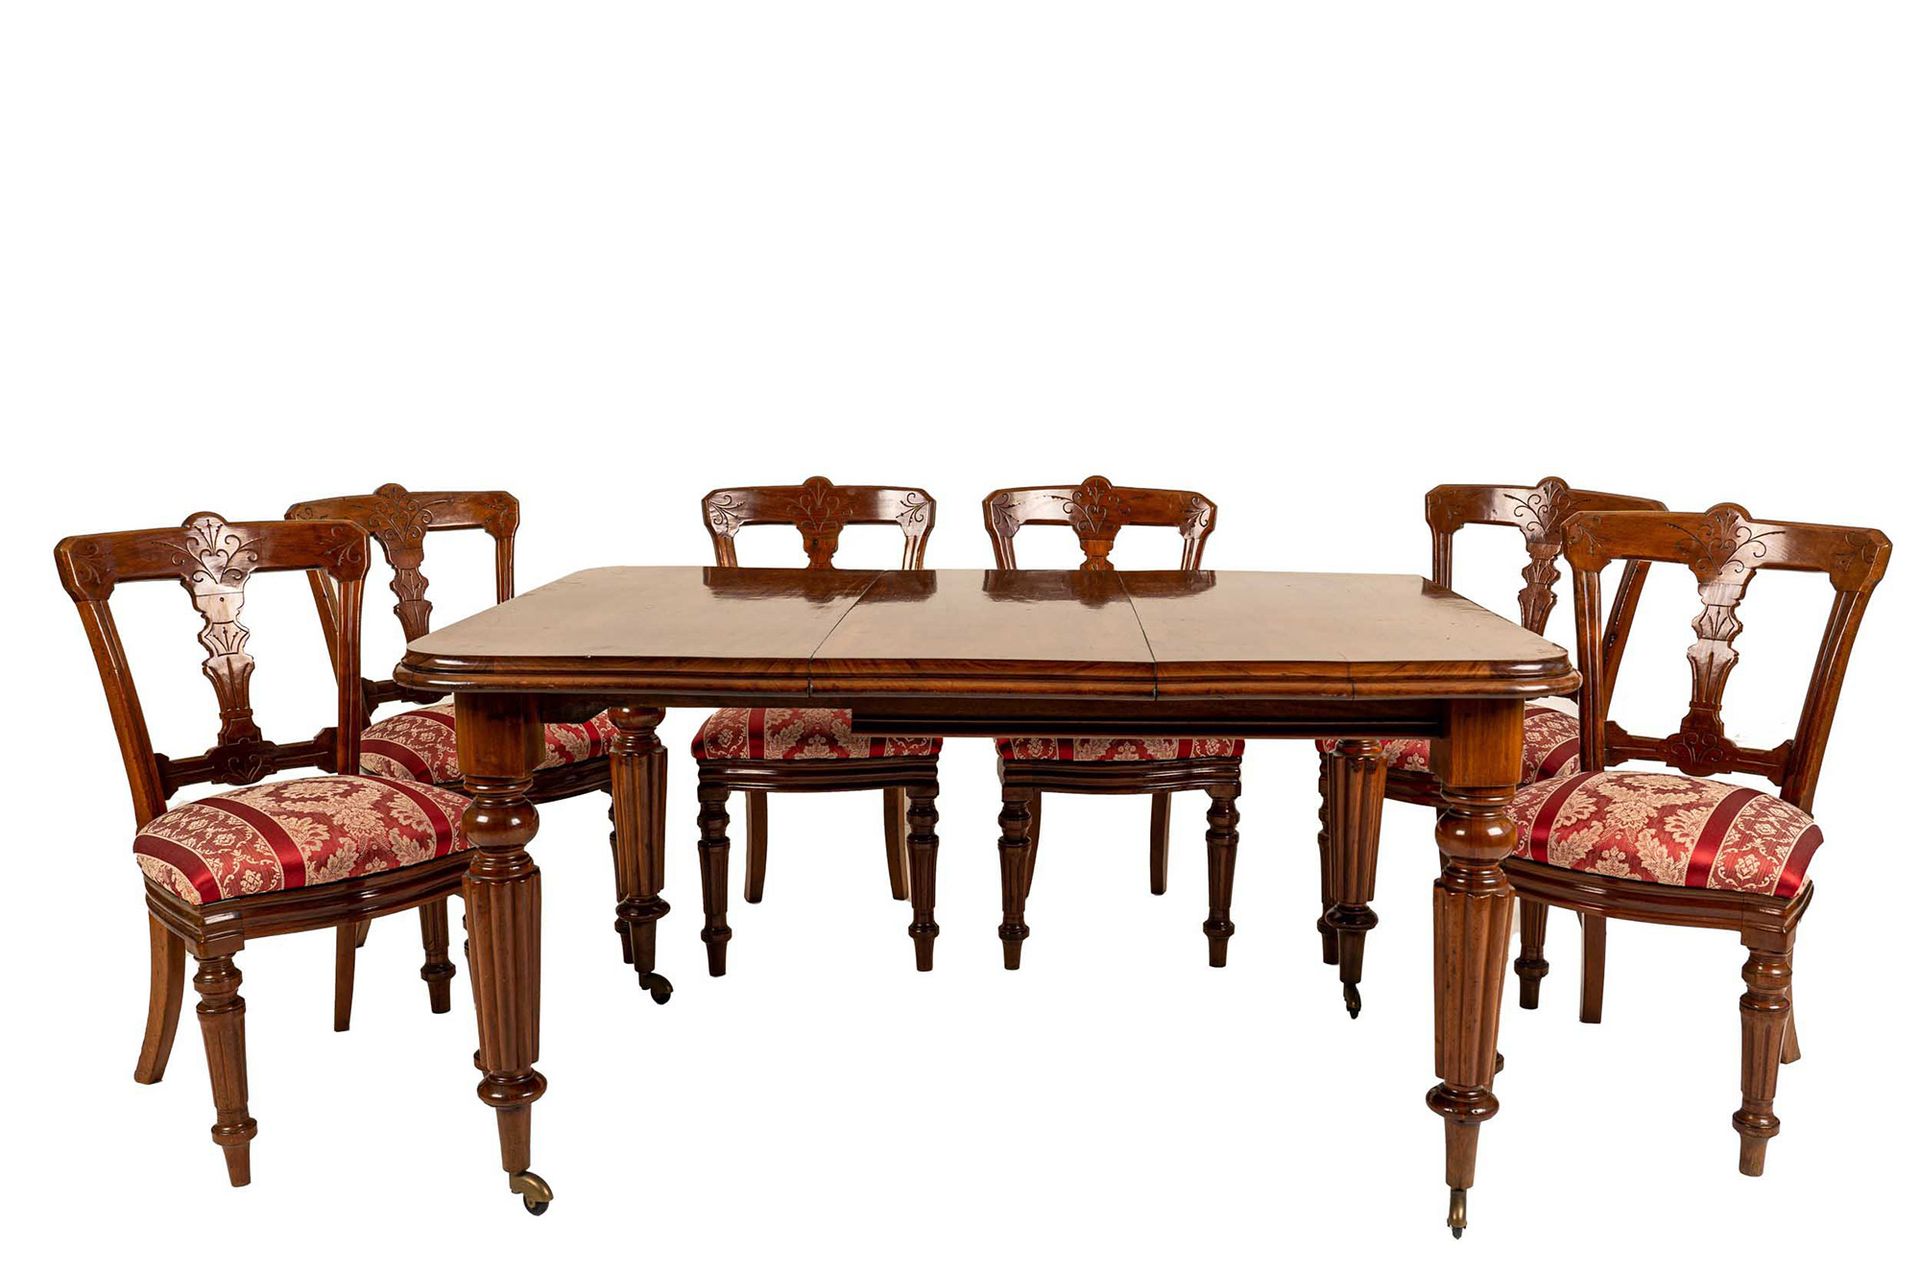 Null 可扩展的餐桌和六把椅子

英国 20世纪初

桌子，长方形桌面，转弯和凹槽腿，配有一个延长线；胡桃木椅子，形状靠背，座椅覆盖红色棉花，转弯腿

带扩展&hellip;